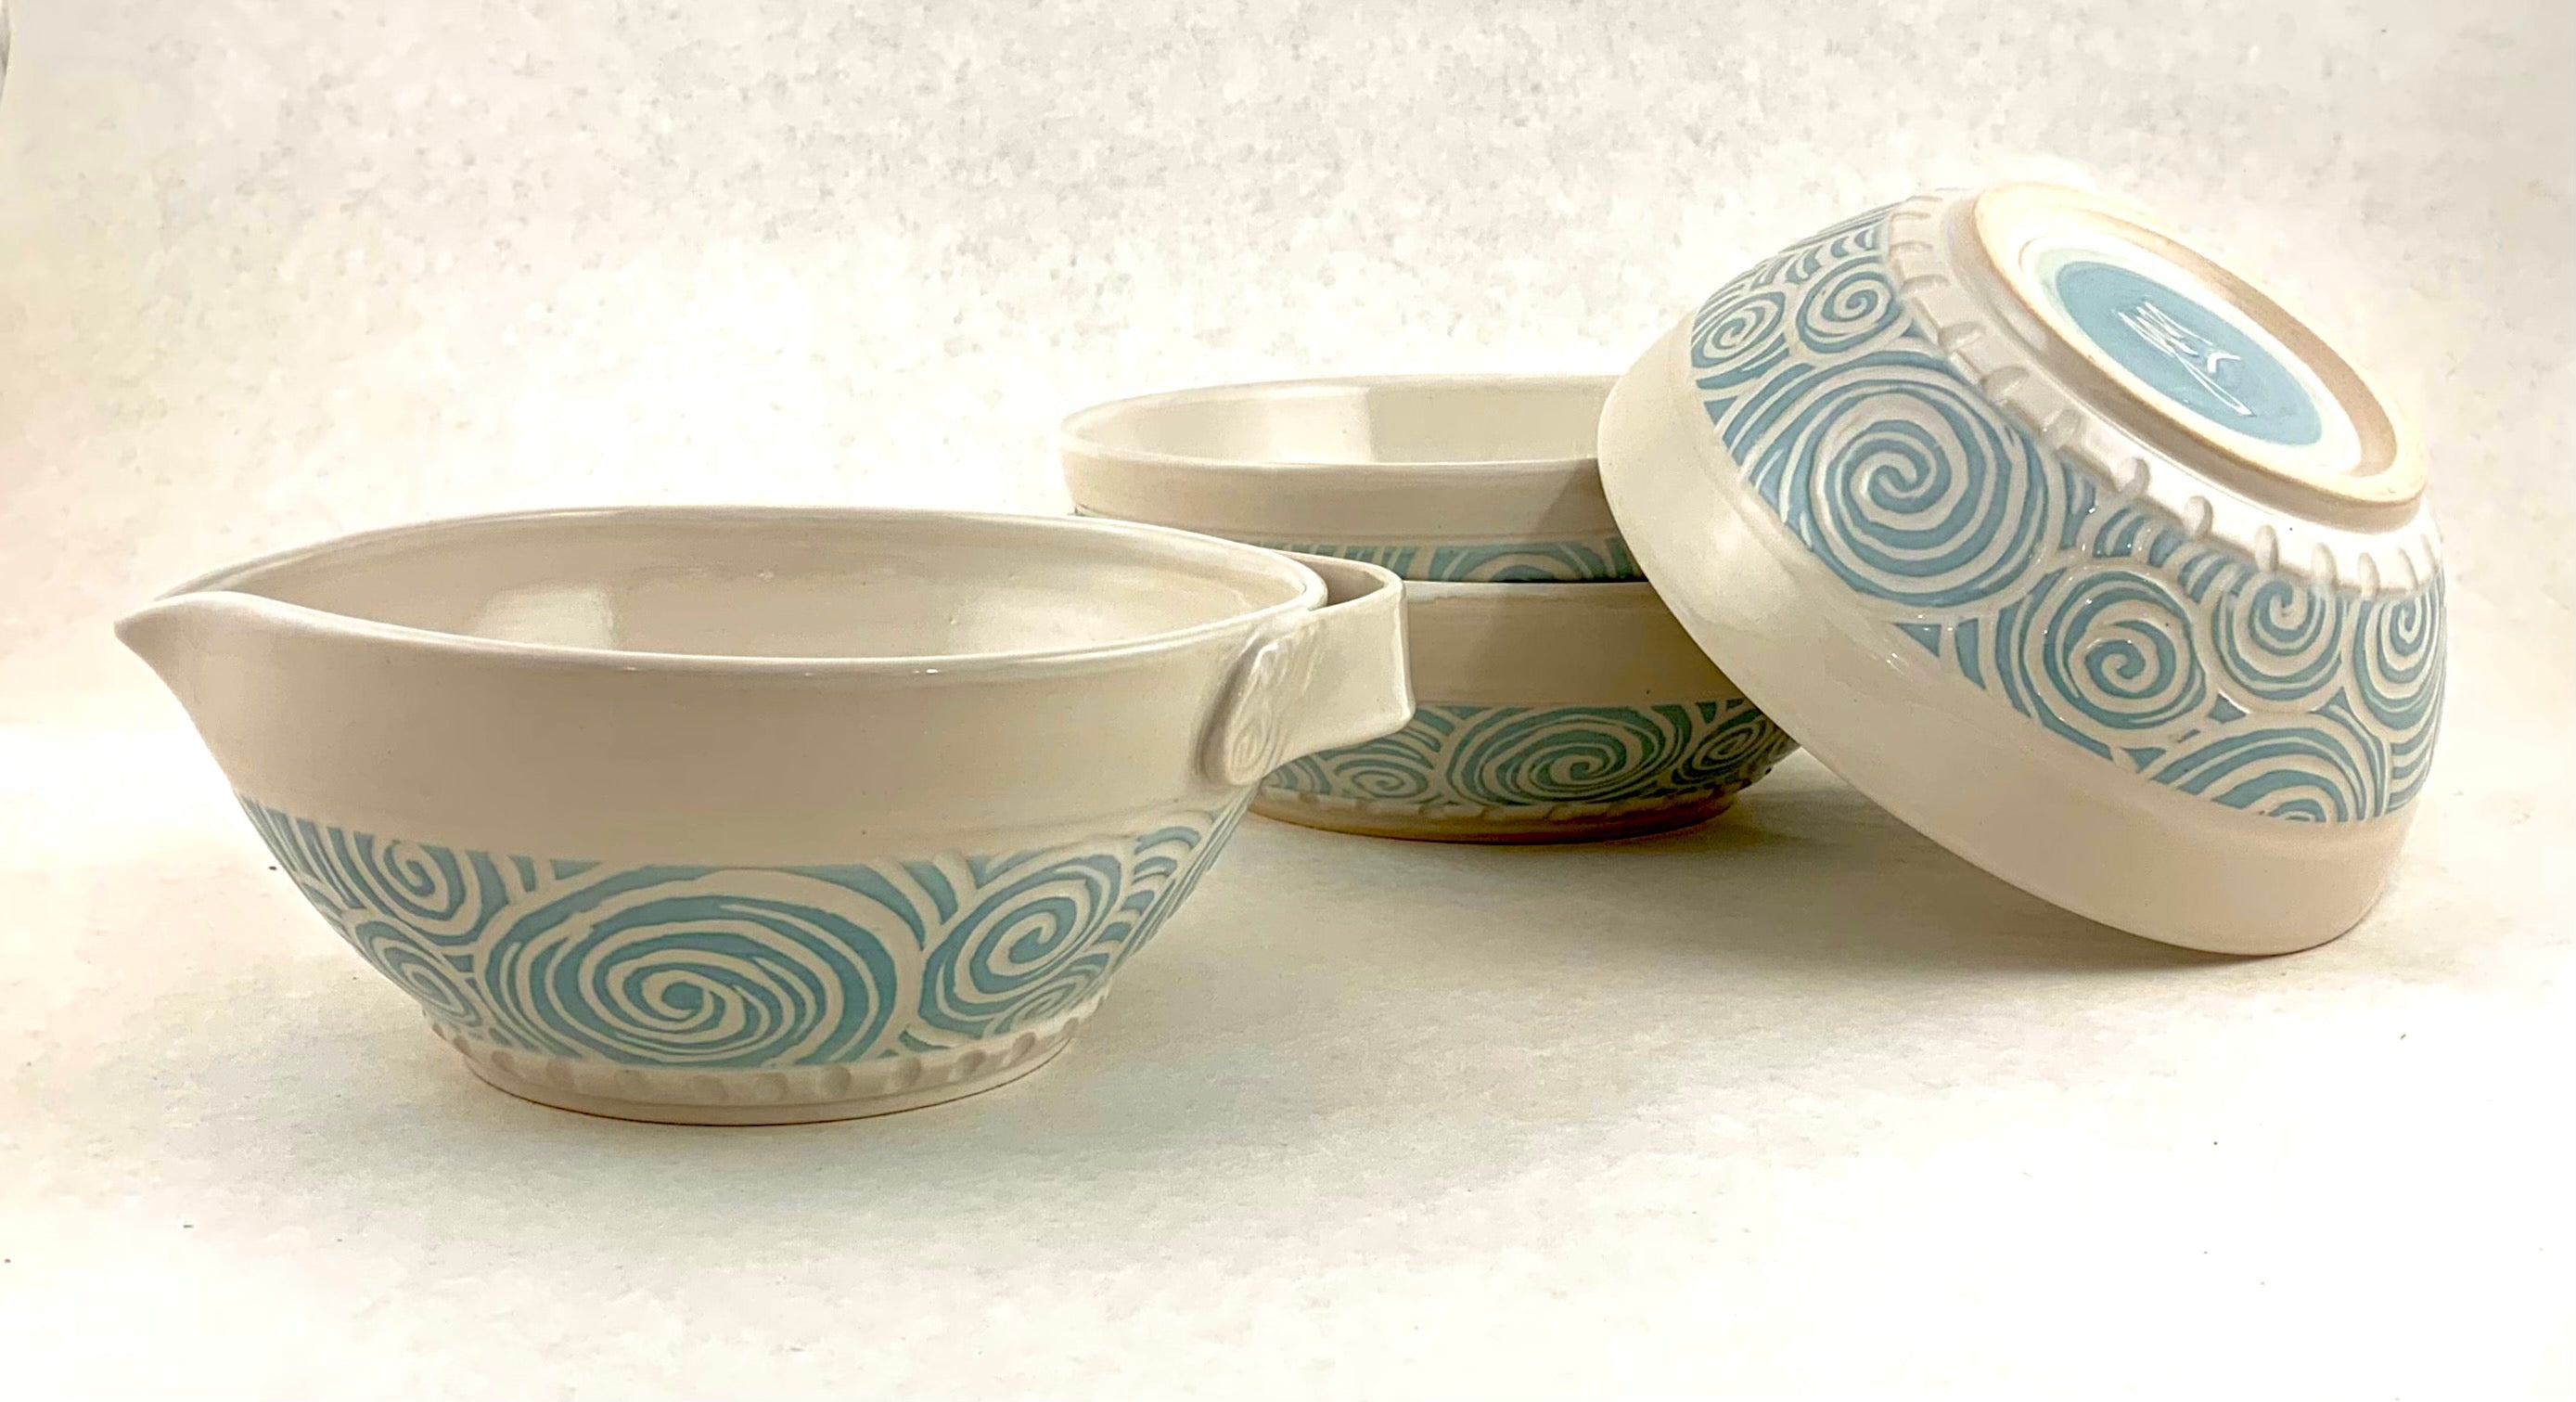 Batter Bowl - blue swirls - porcelain